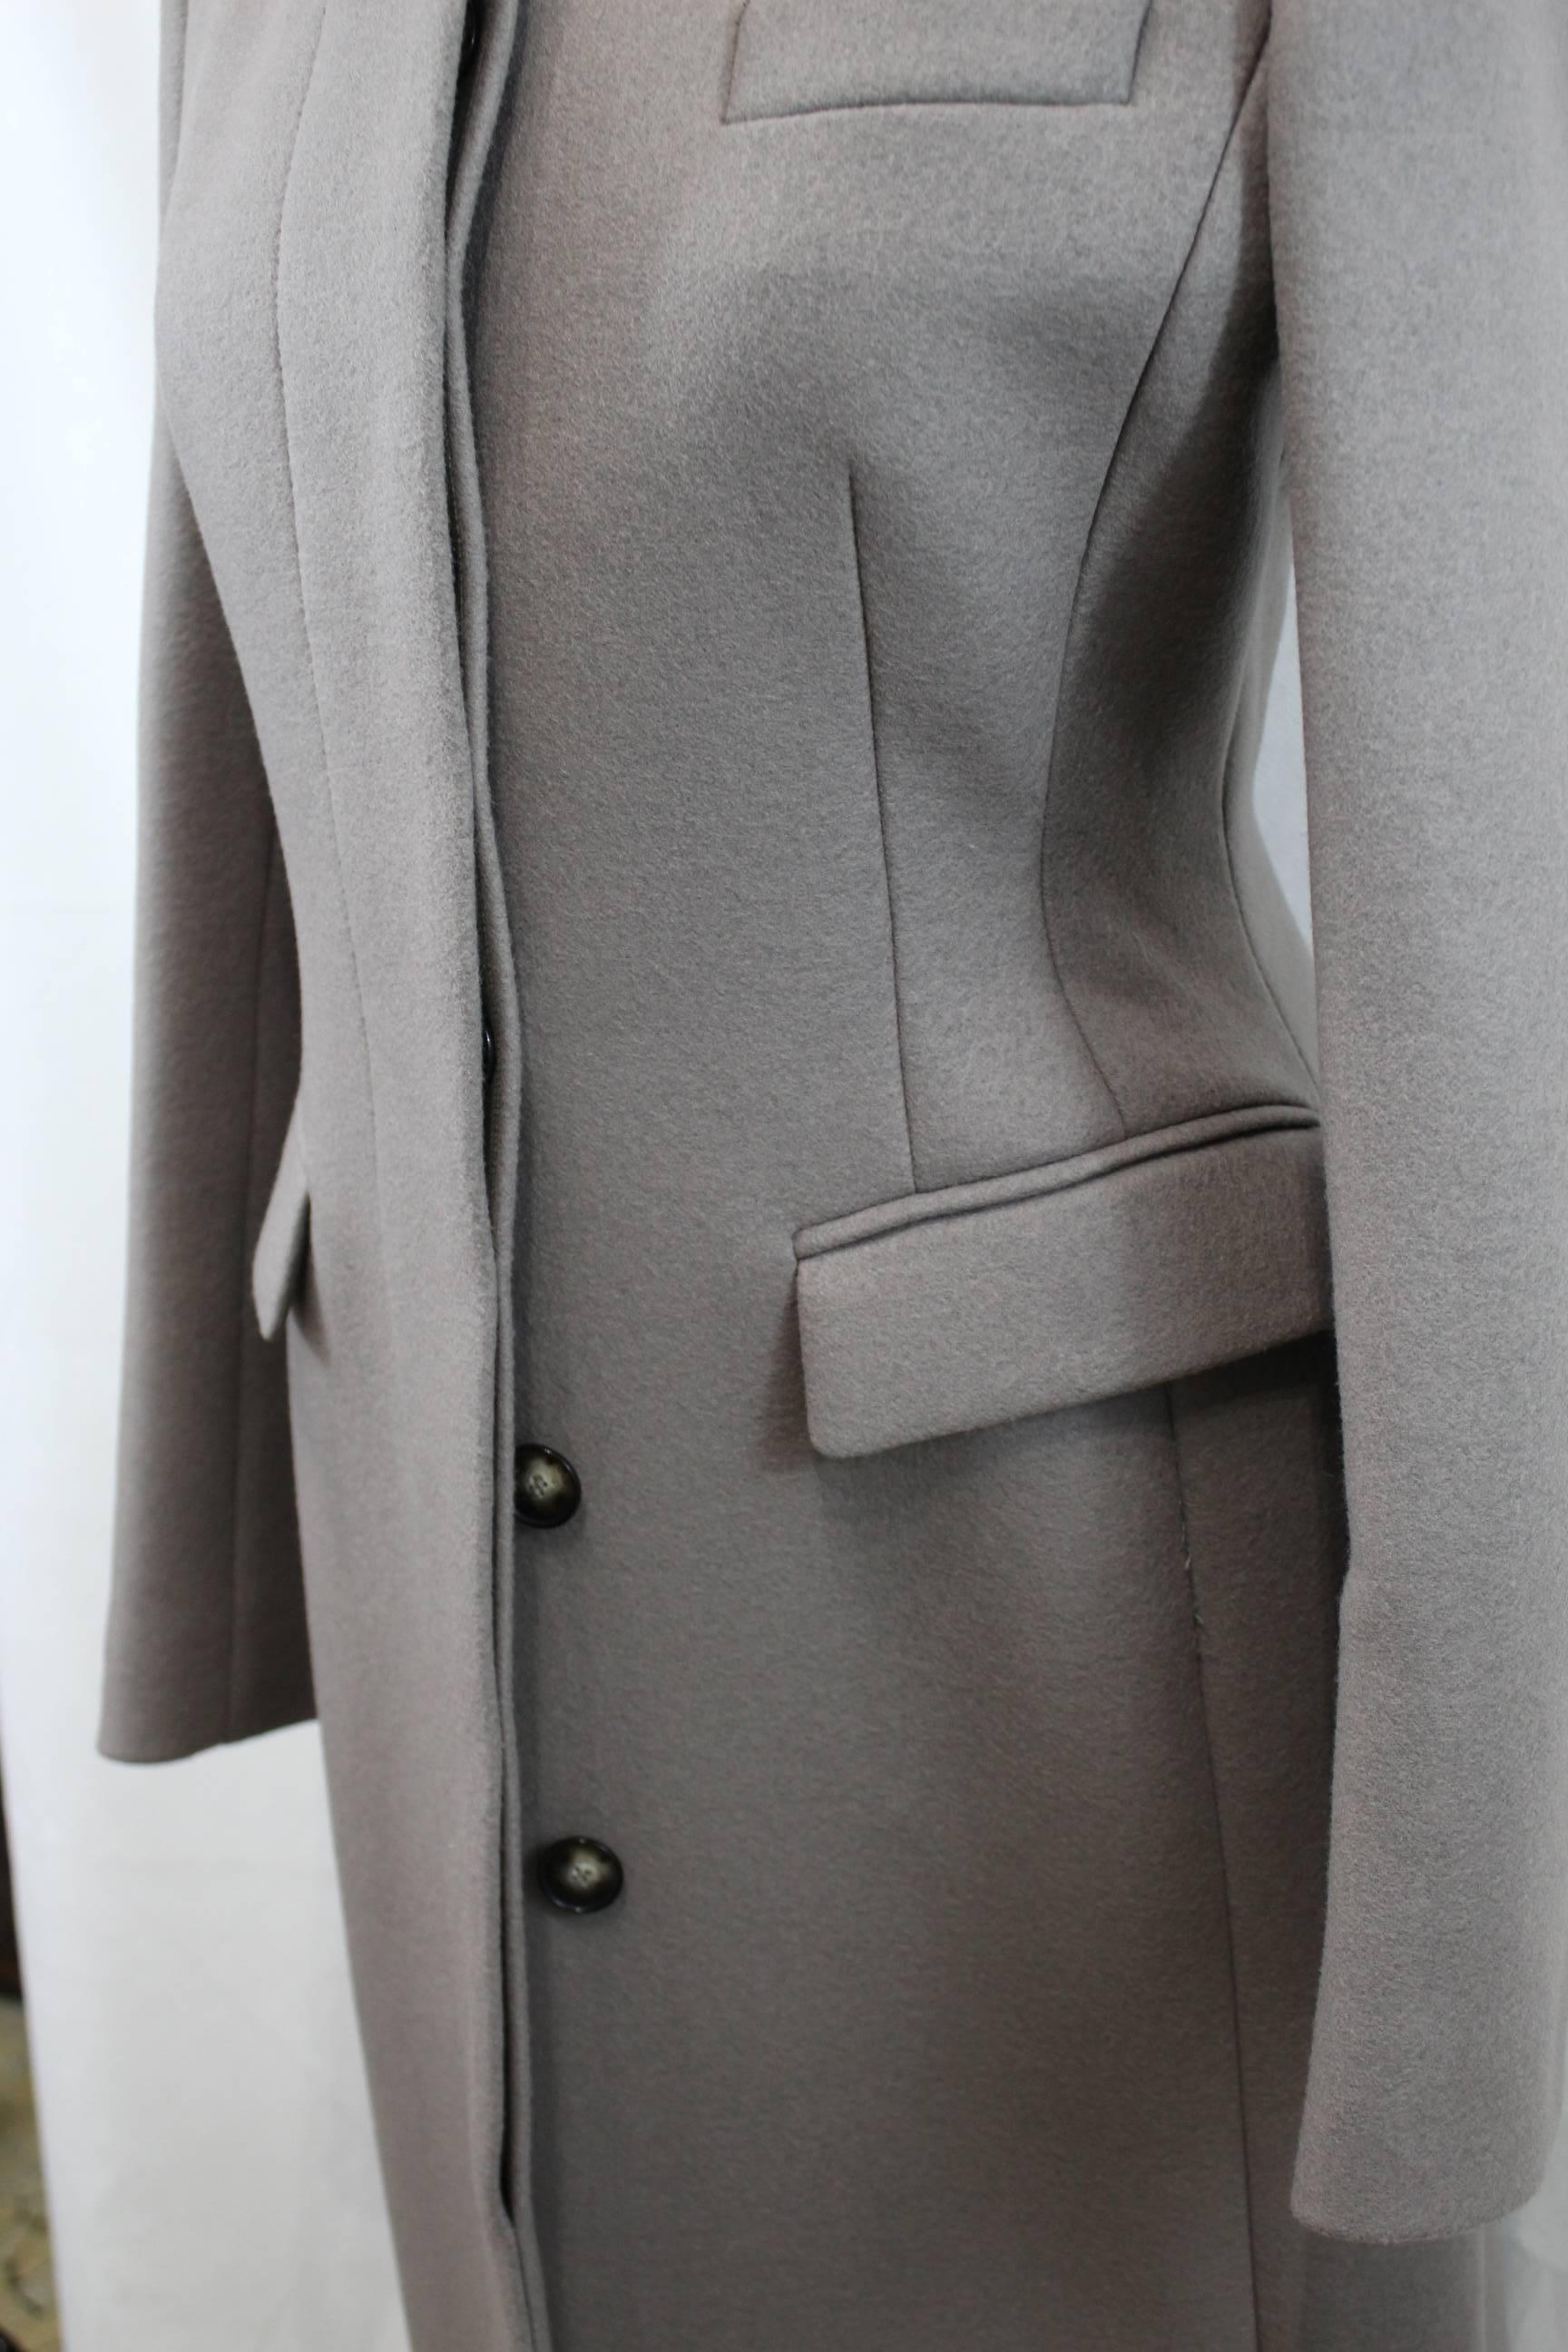 Women's Stella McCartney Nice Wool Coat. New never used. Retail Price 1800$